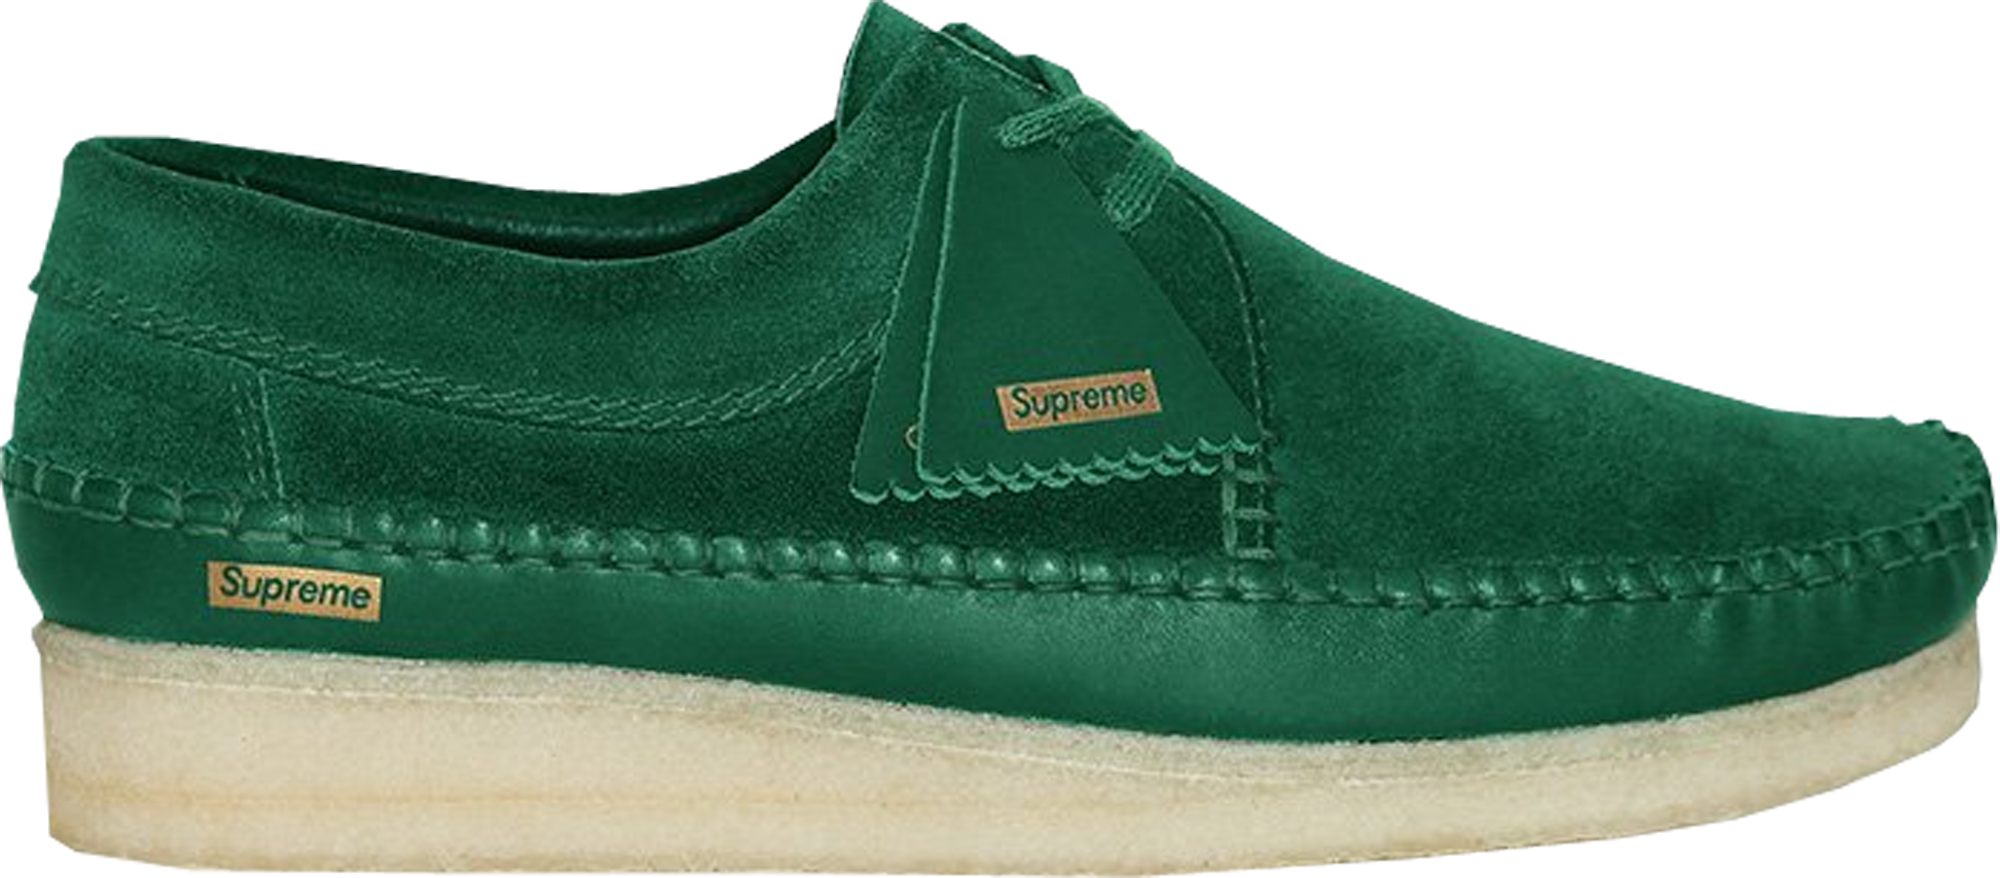 Clarks Weaver Supreme Green - Sneakers